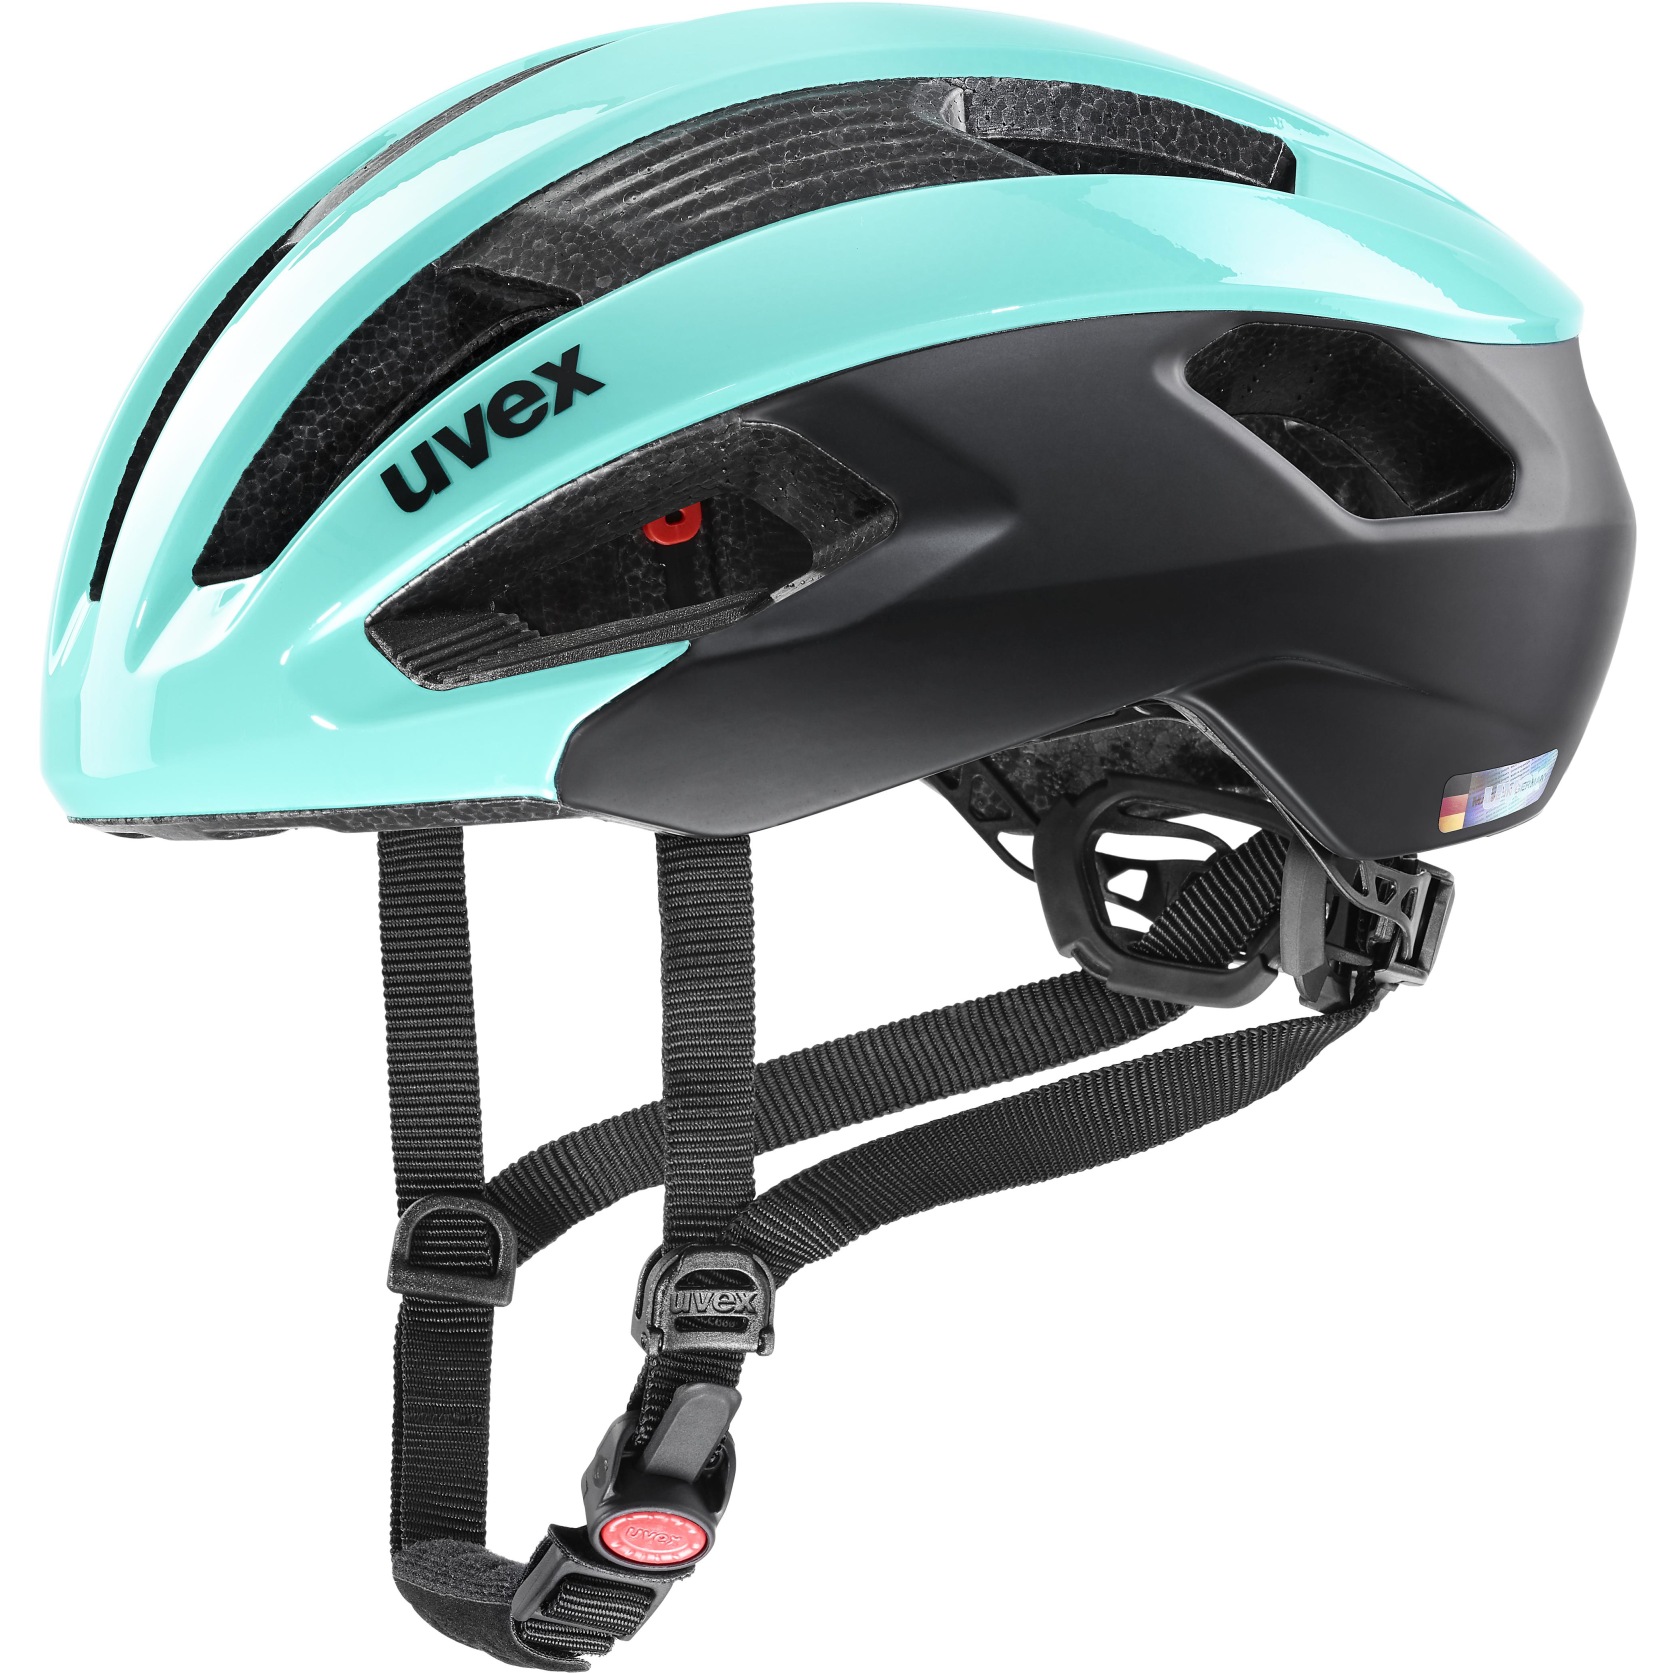 Image of Uvex rise cc Helmet - aqua-black mat